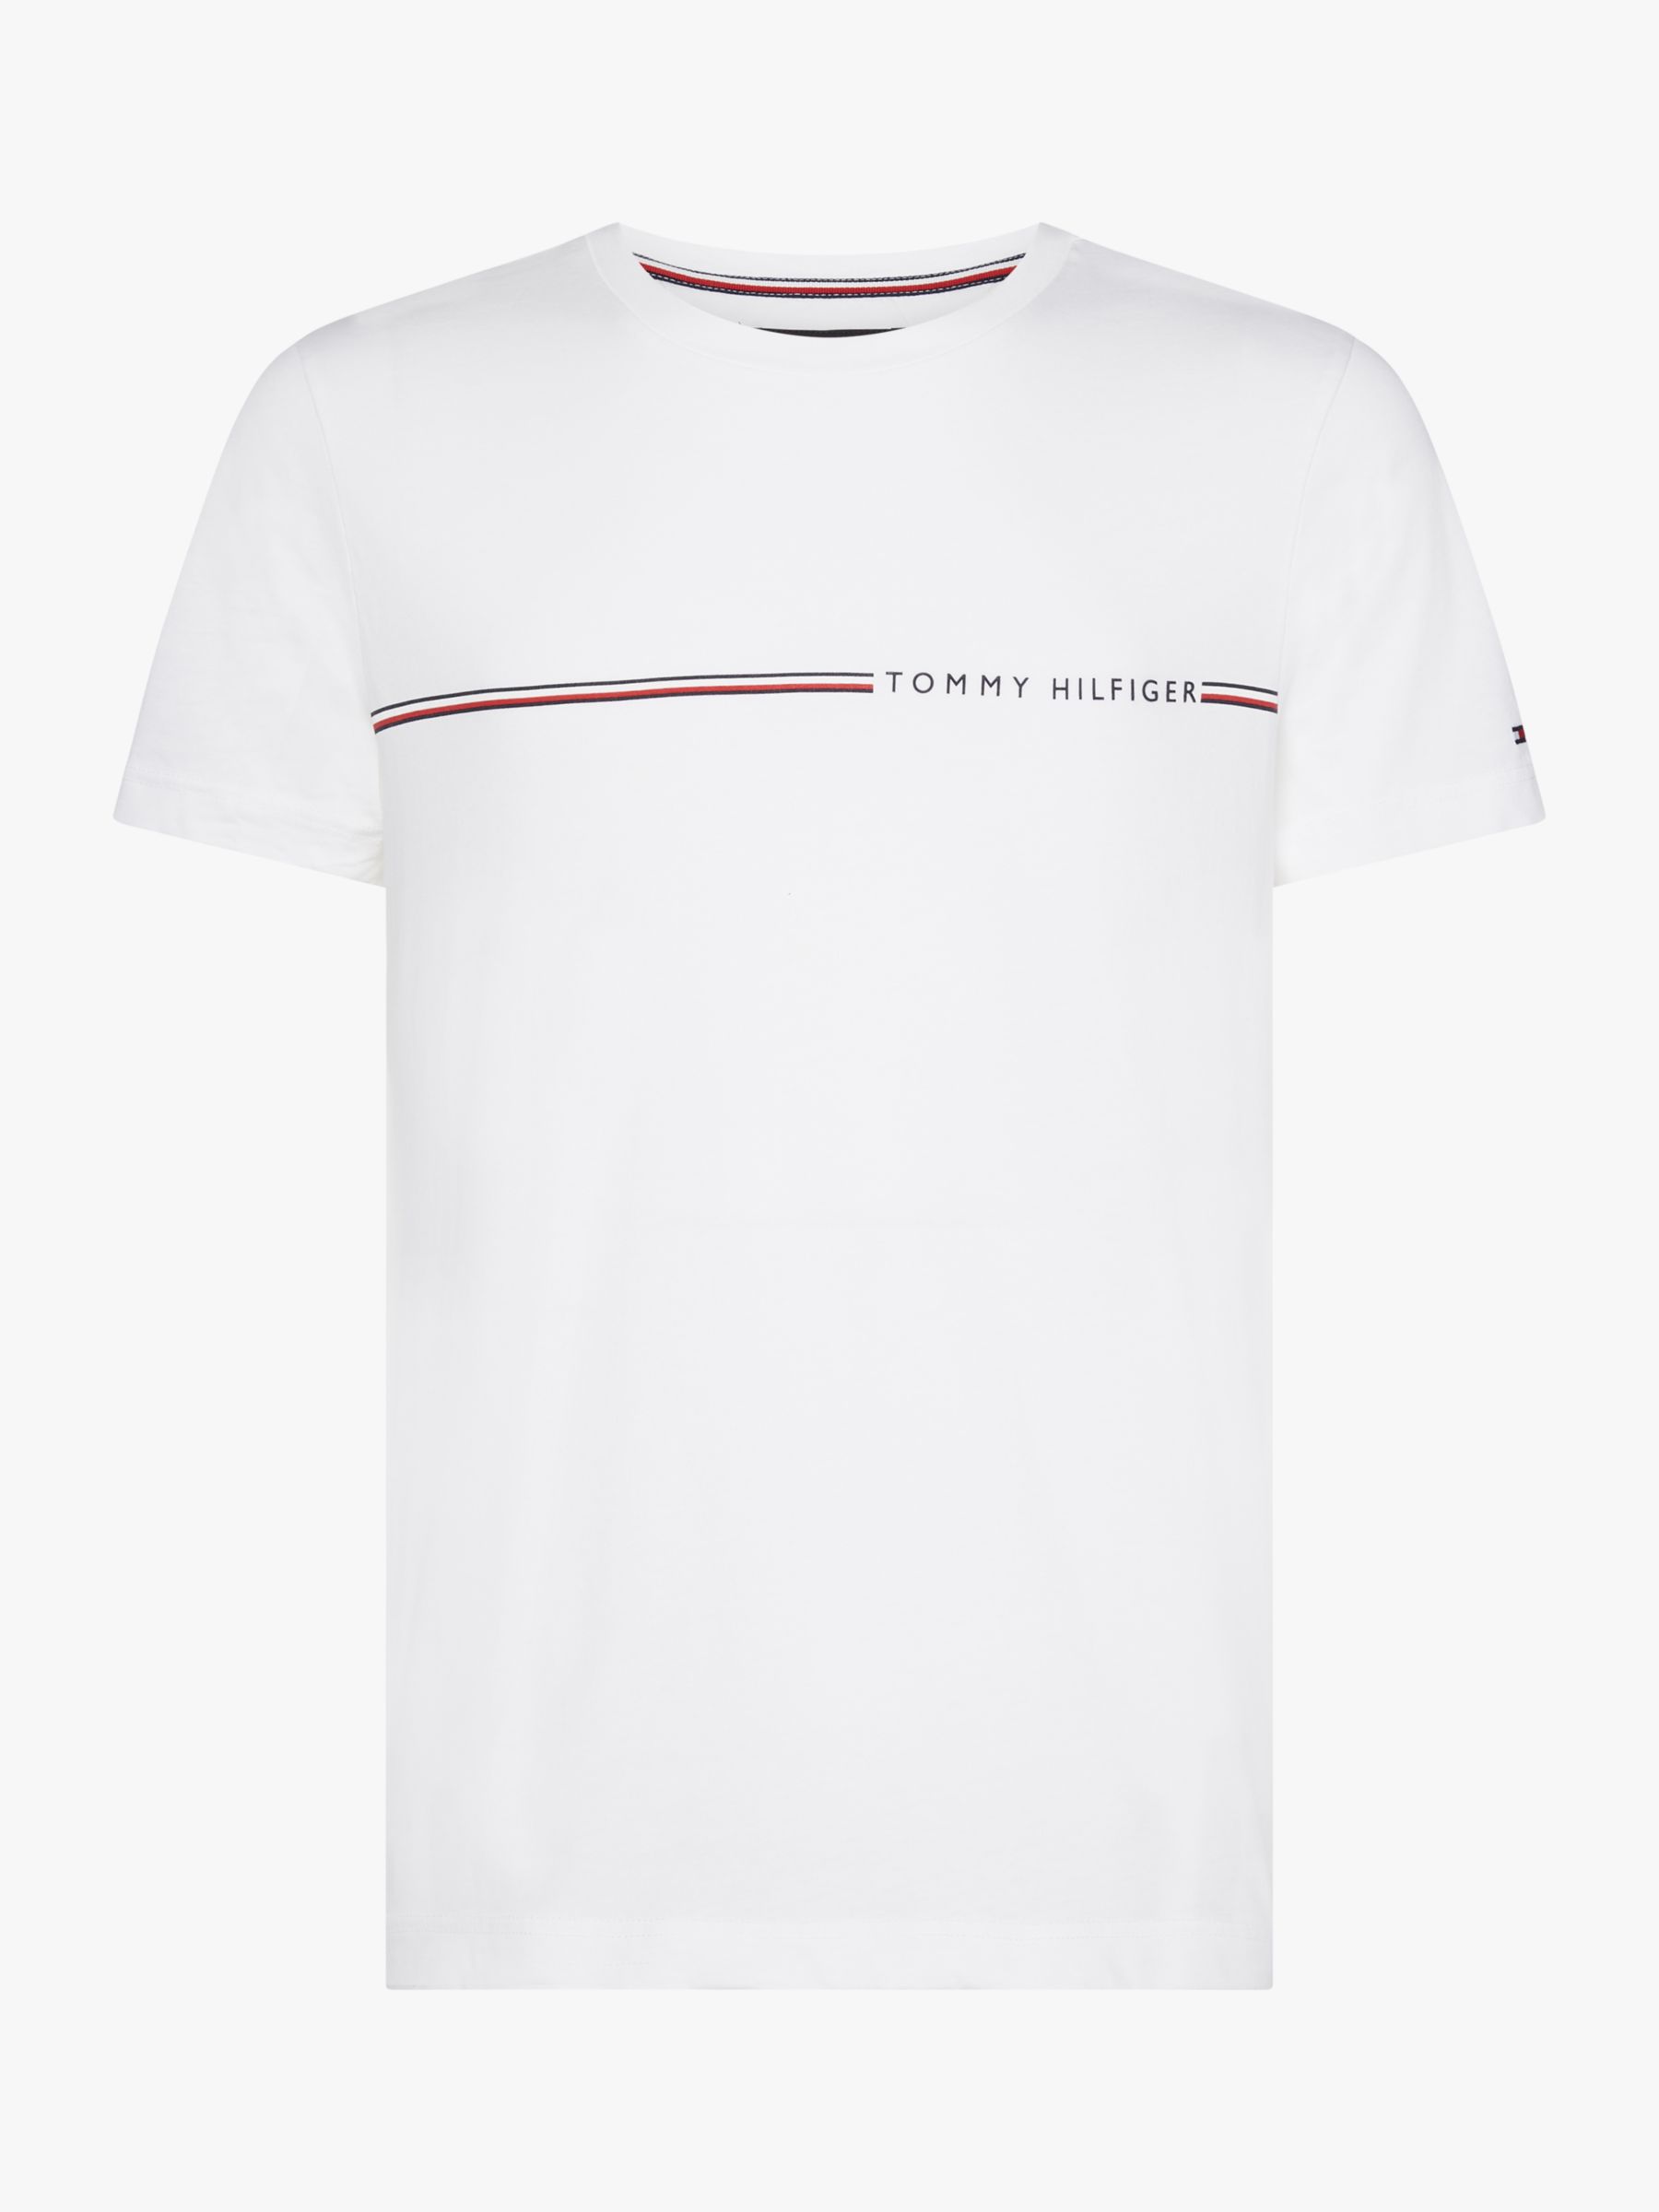 Tommy Hilfiger Logo T-Shirt, Bright 